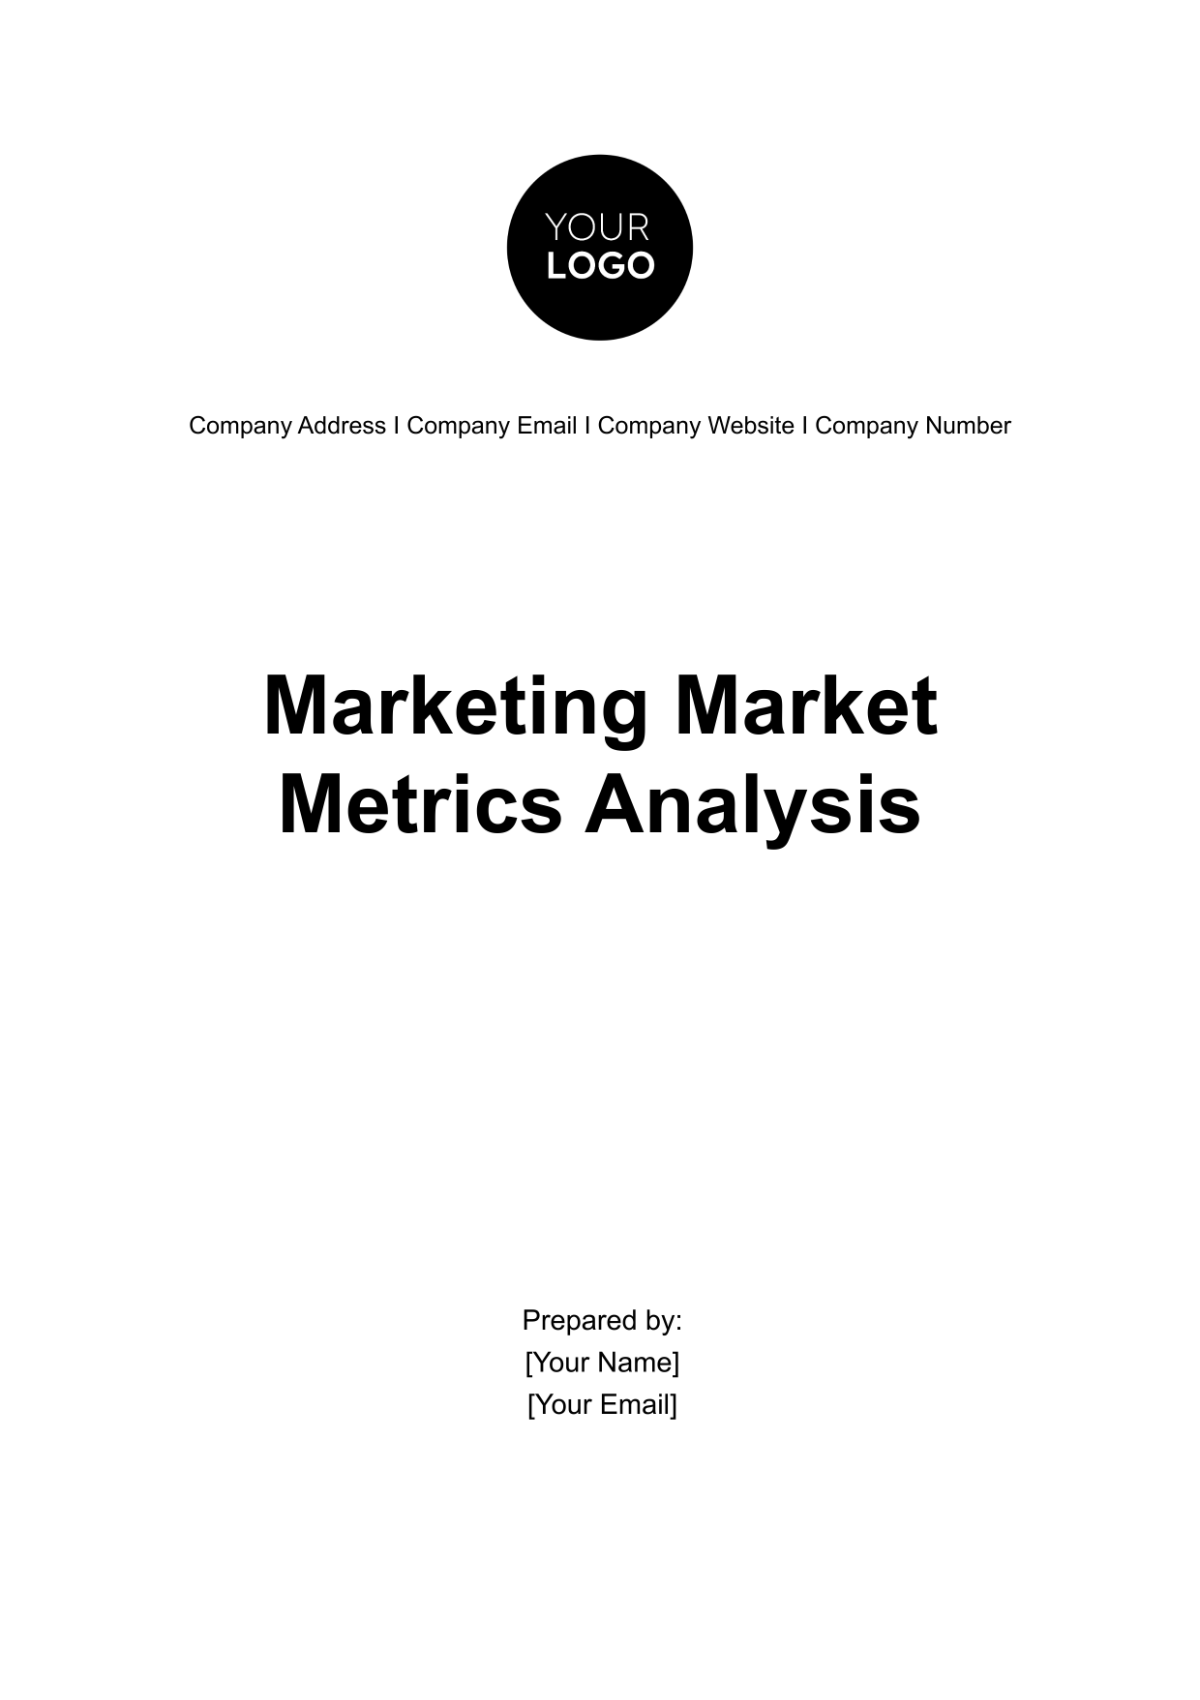 Free Marketing Market Metrics Analysis Template